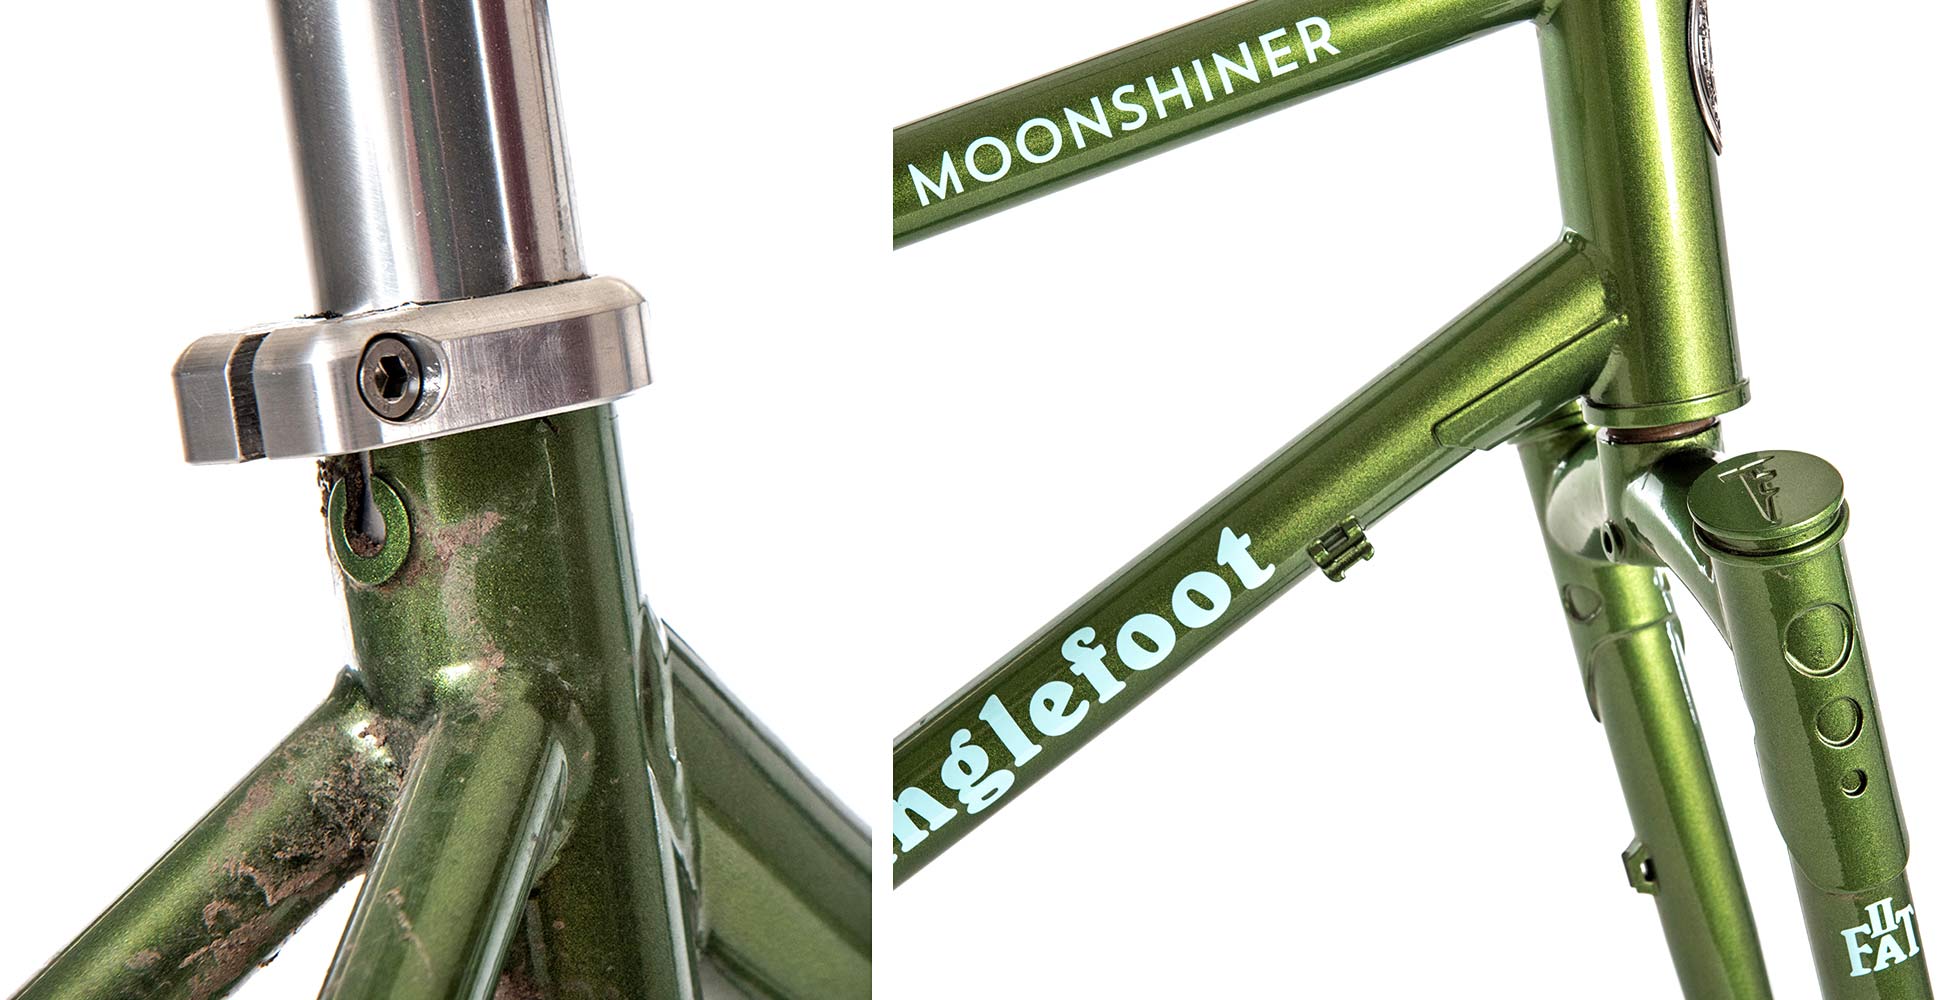 Tanglefoot Moonshiner MTB, 27.5+ rigid steel dropbar adventure touring bikepacking mountain bike, tiny details